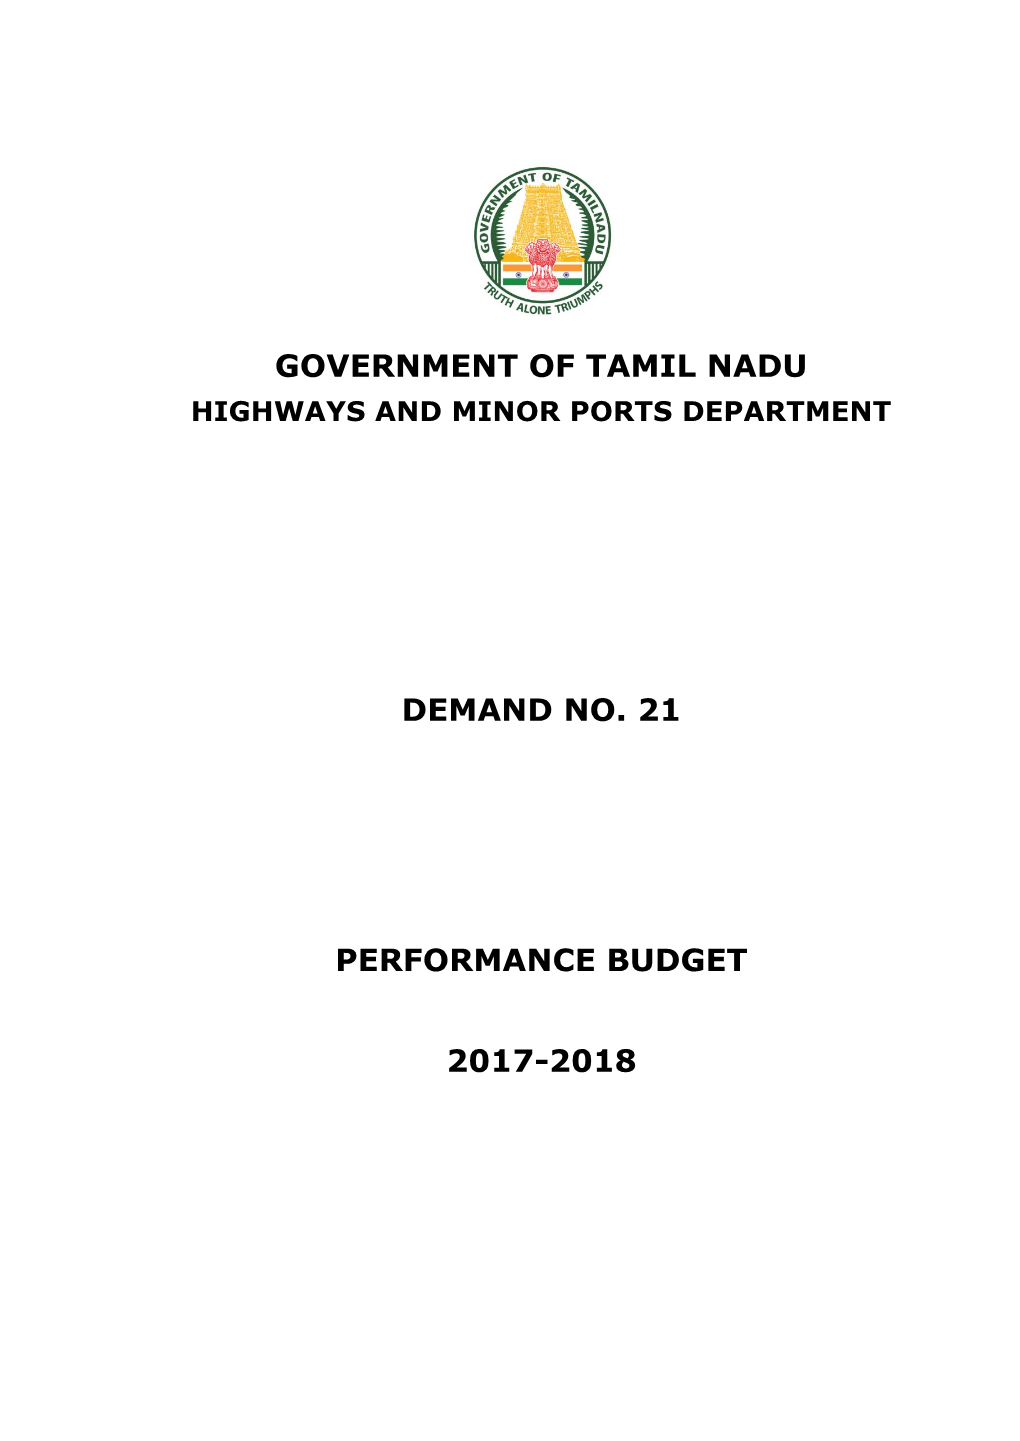 Government of Tamil Nadu Demand No. 21 Performance